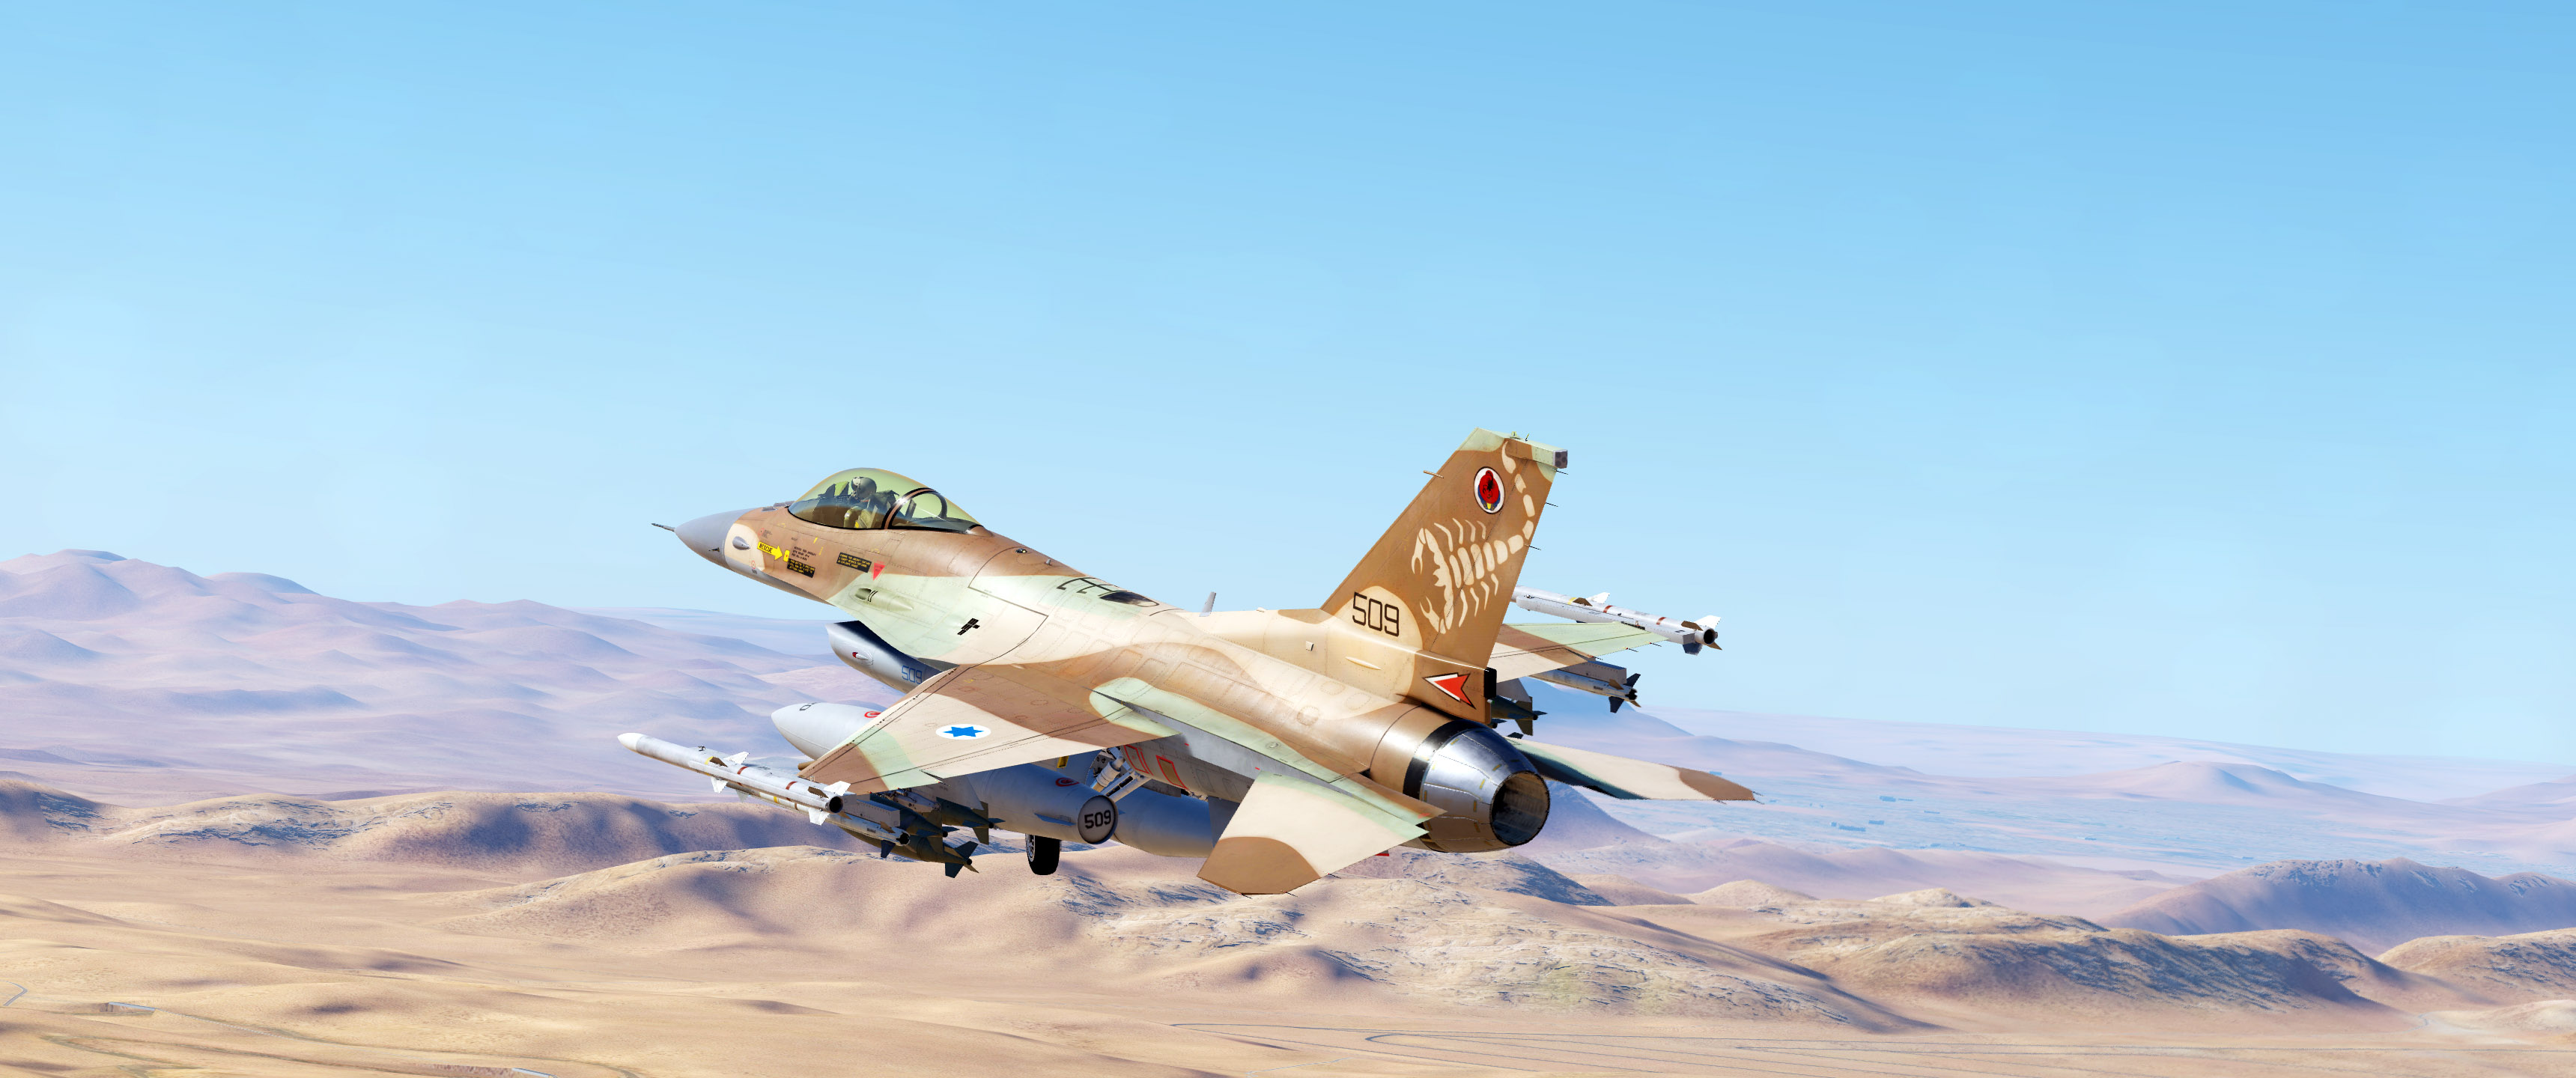 [Updated] IAF F16C - 105 Squadron - The Scorpion